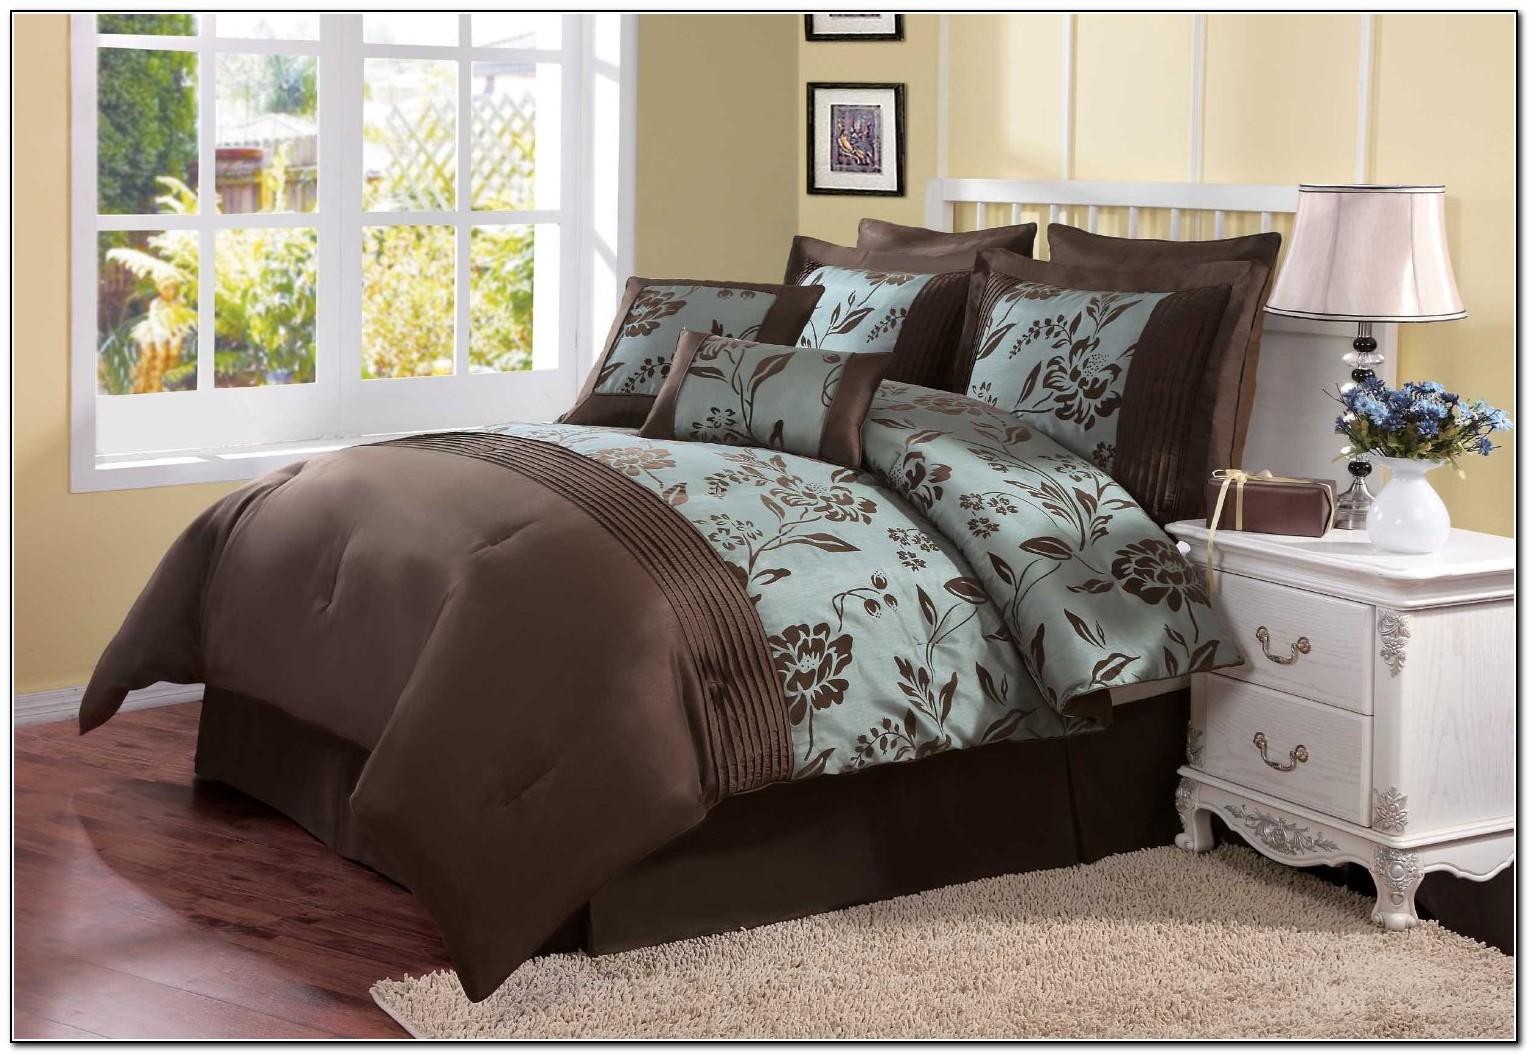 Aqua Blue And Brown Bedding Sets - Beds : Home Design ...